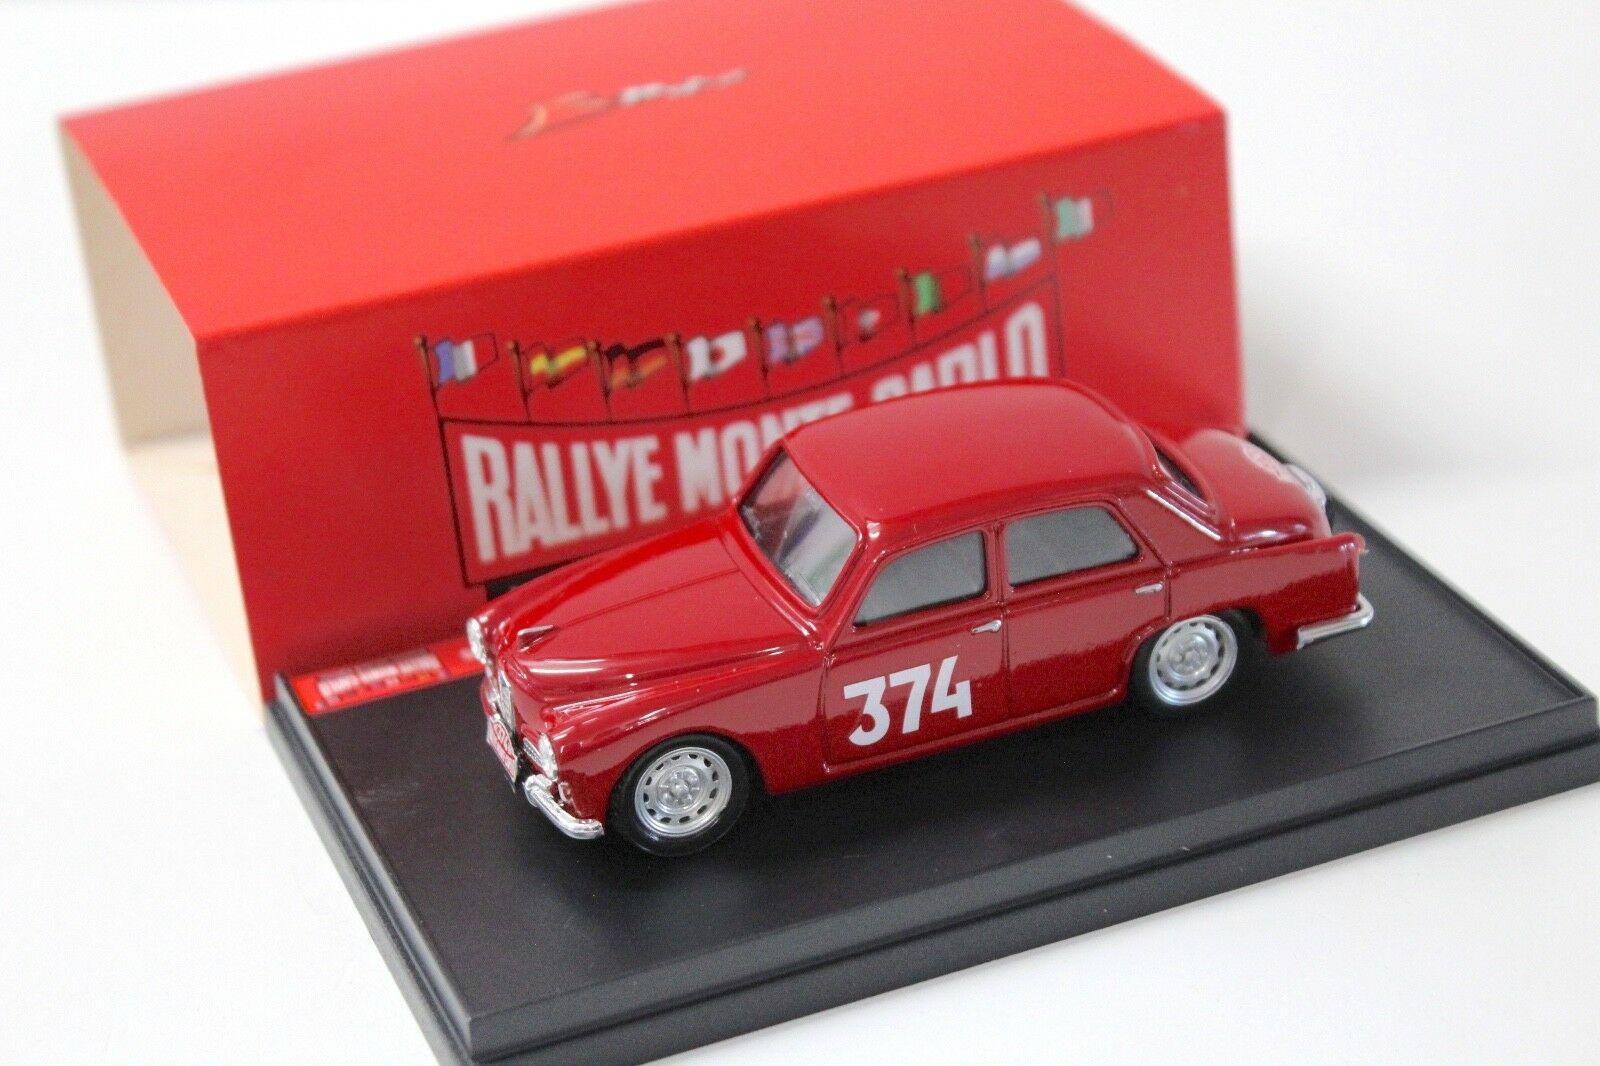 1:43 Brumm Alfa Romeo 1900 Rallye Monte Carlo" 1955 #374 red